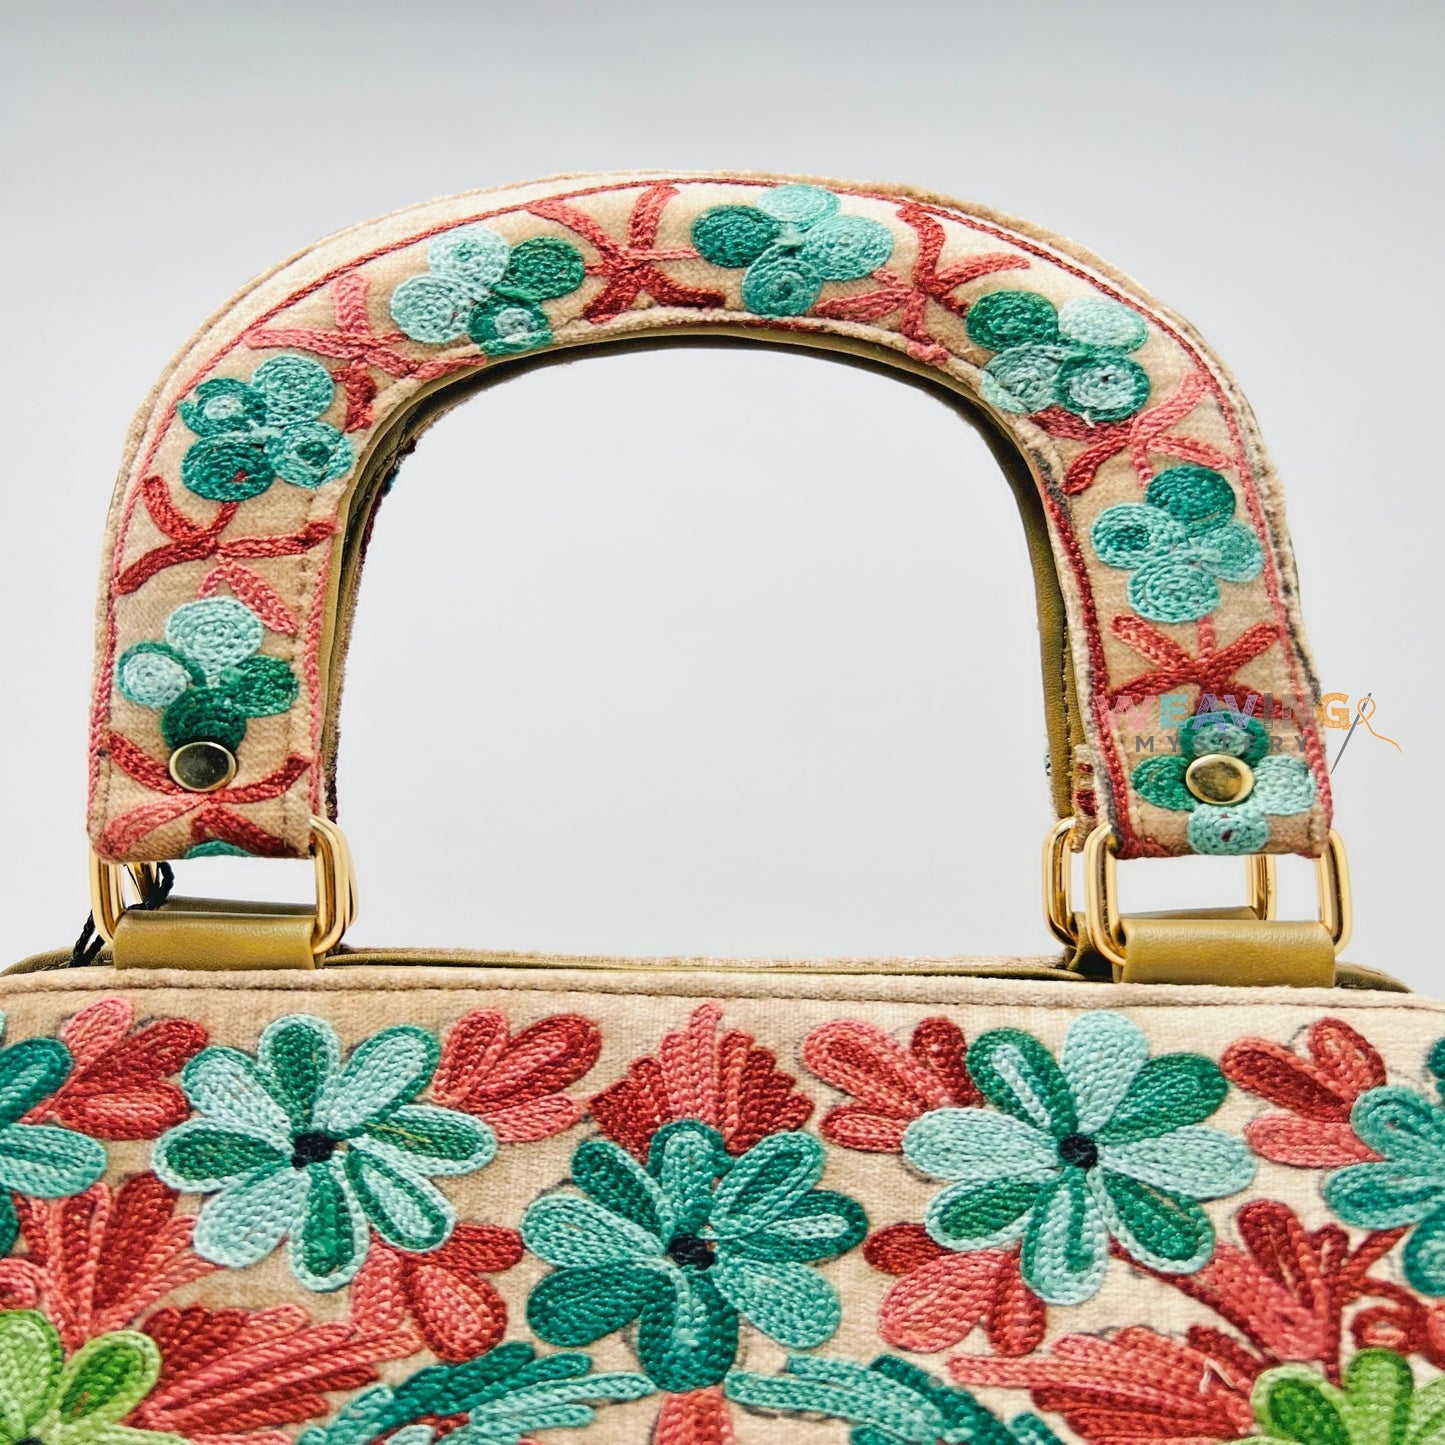 Blissful Burgundy Blooms: Elegant Embroidered Handbag